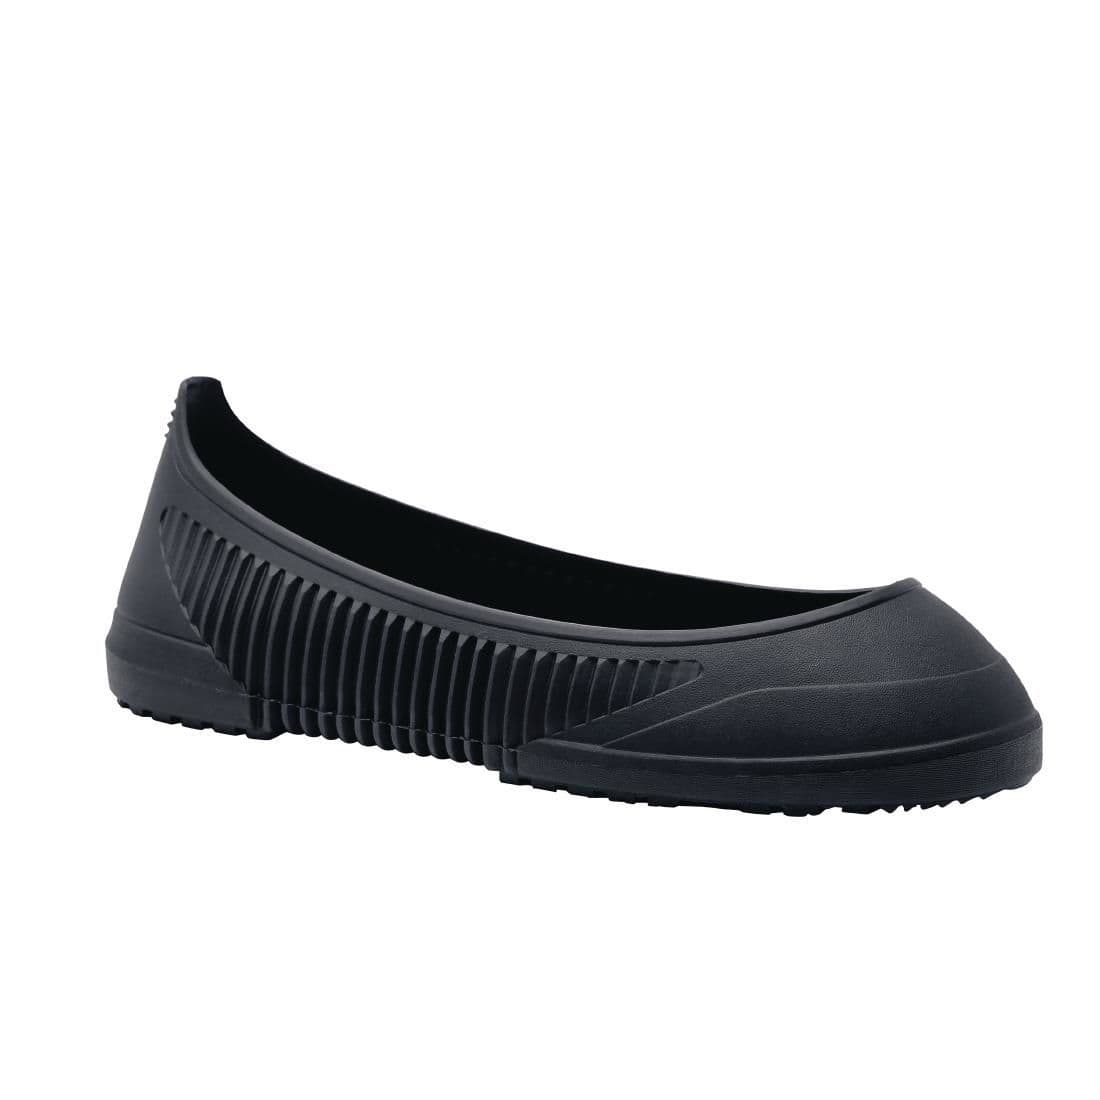 BB598-L Shoes for Crews Crewguard Overshoes Black